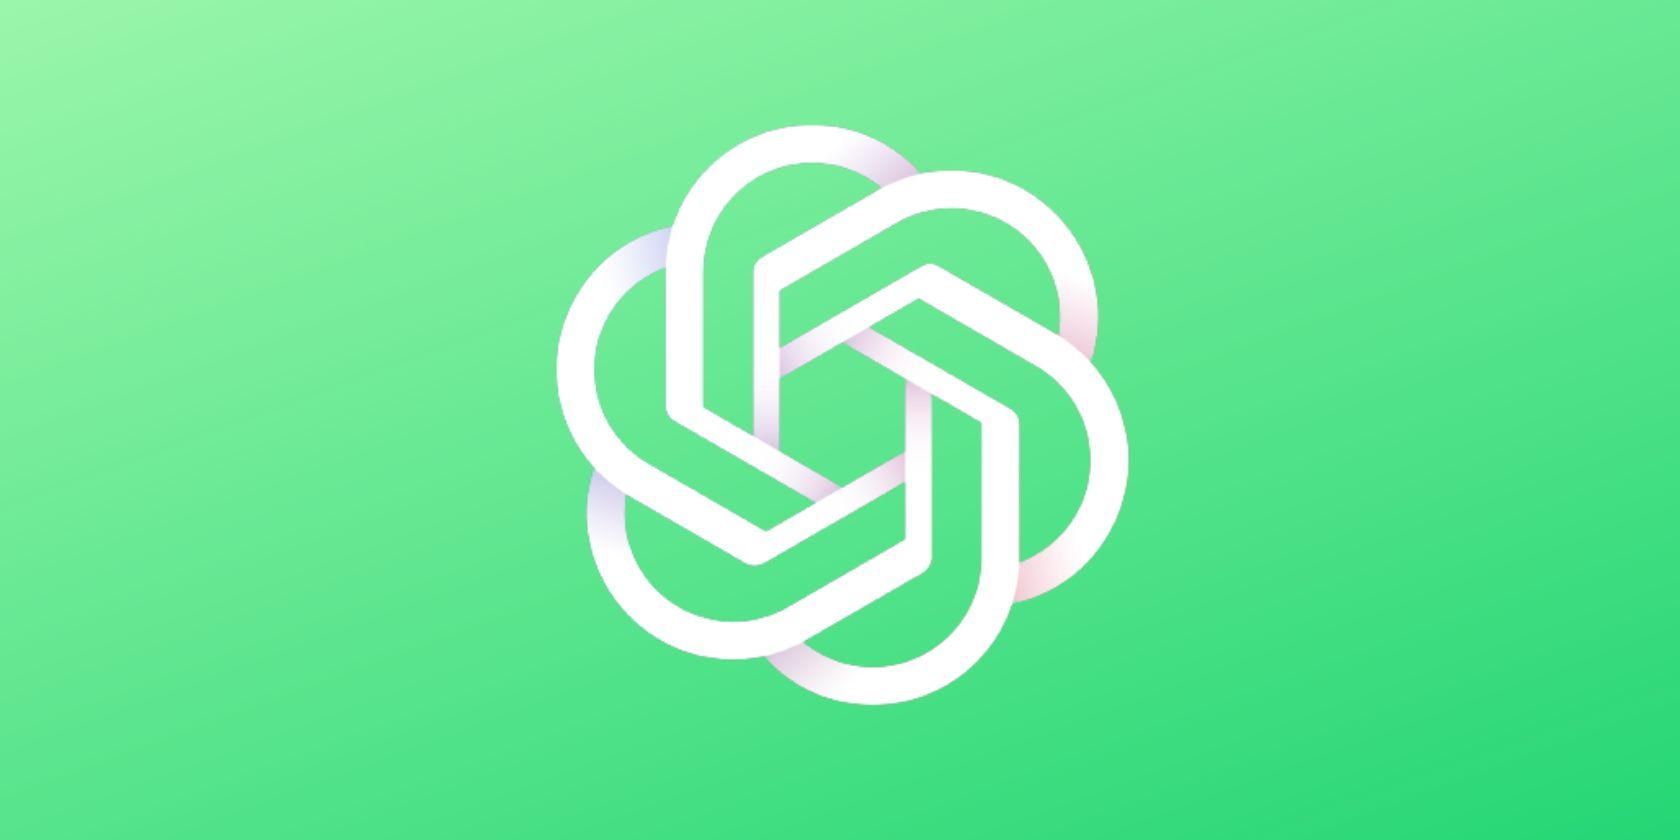 ChatGPT logo seen on light green background